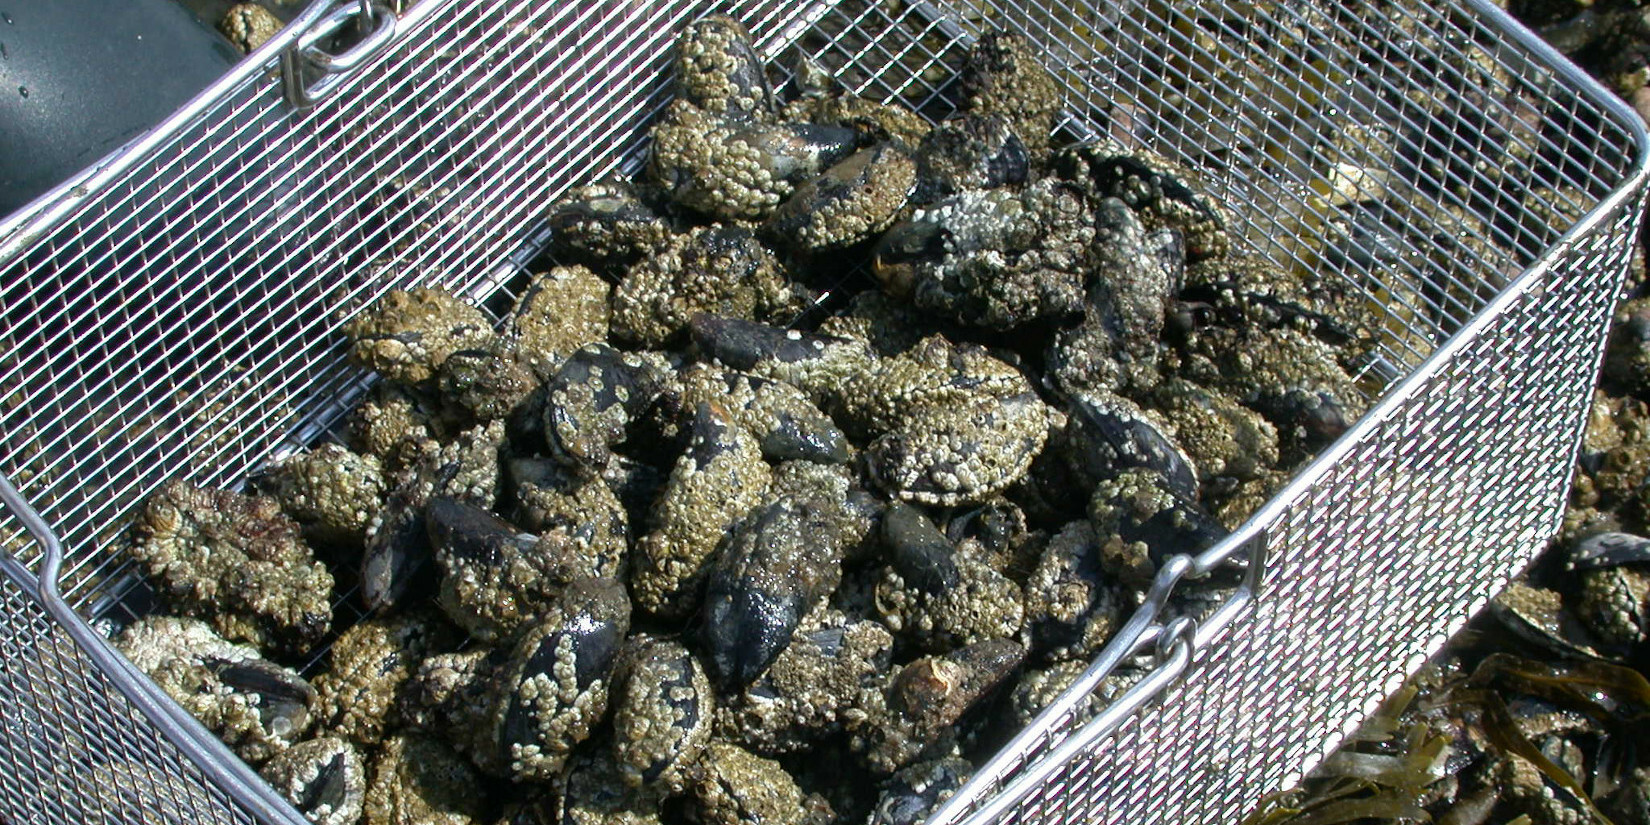 Blue mussels in a basket